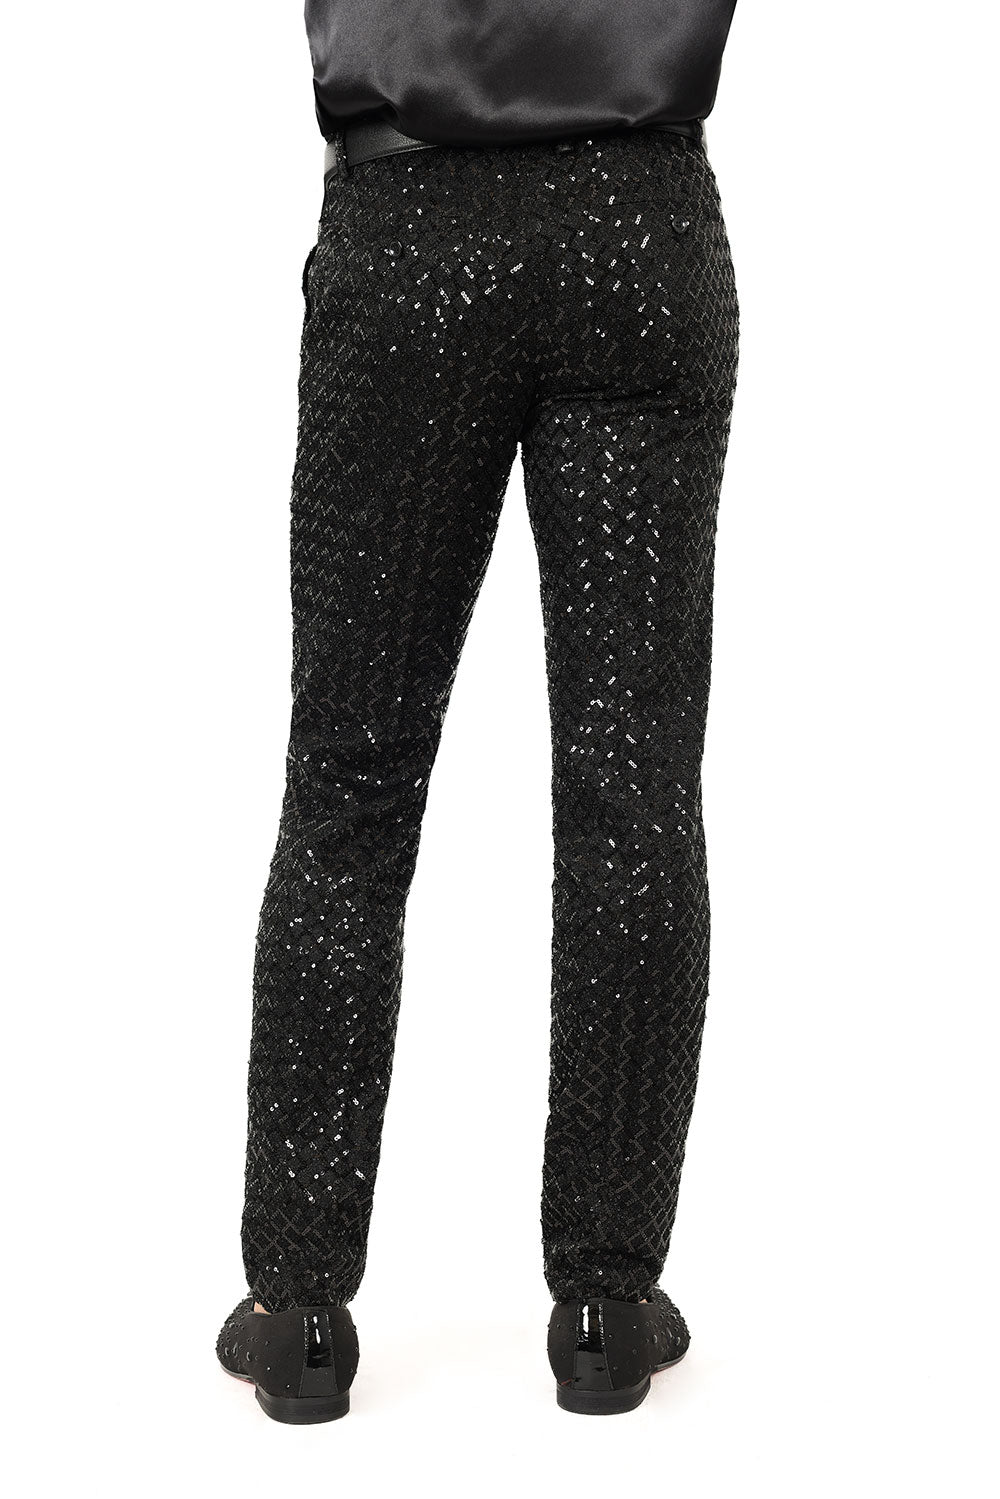 Barabas Men's Sequin Diamond Design Shiny Chino Pants 2CP3099 Black